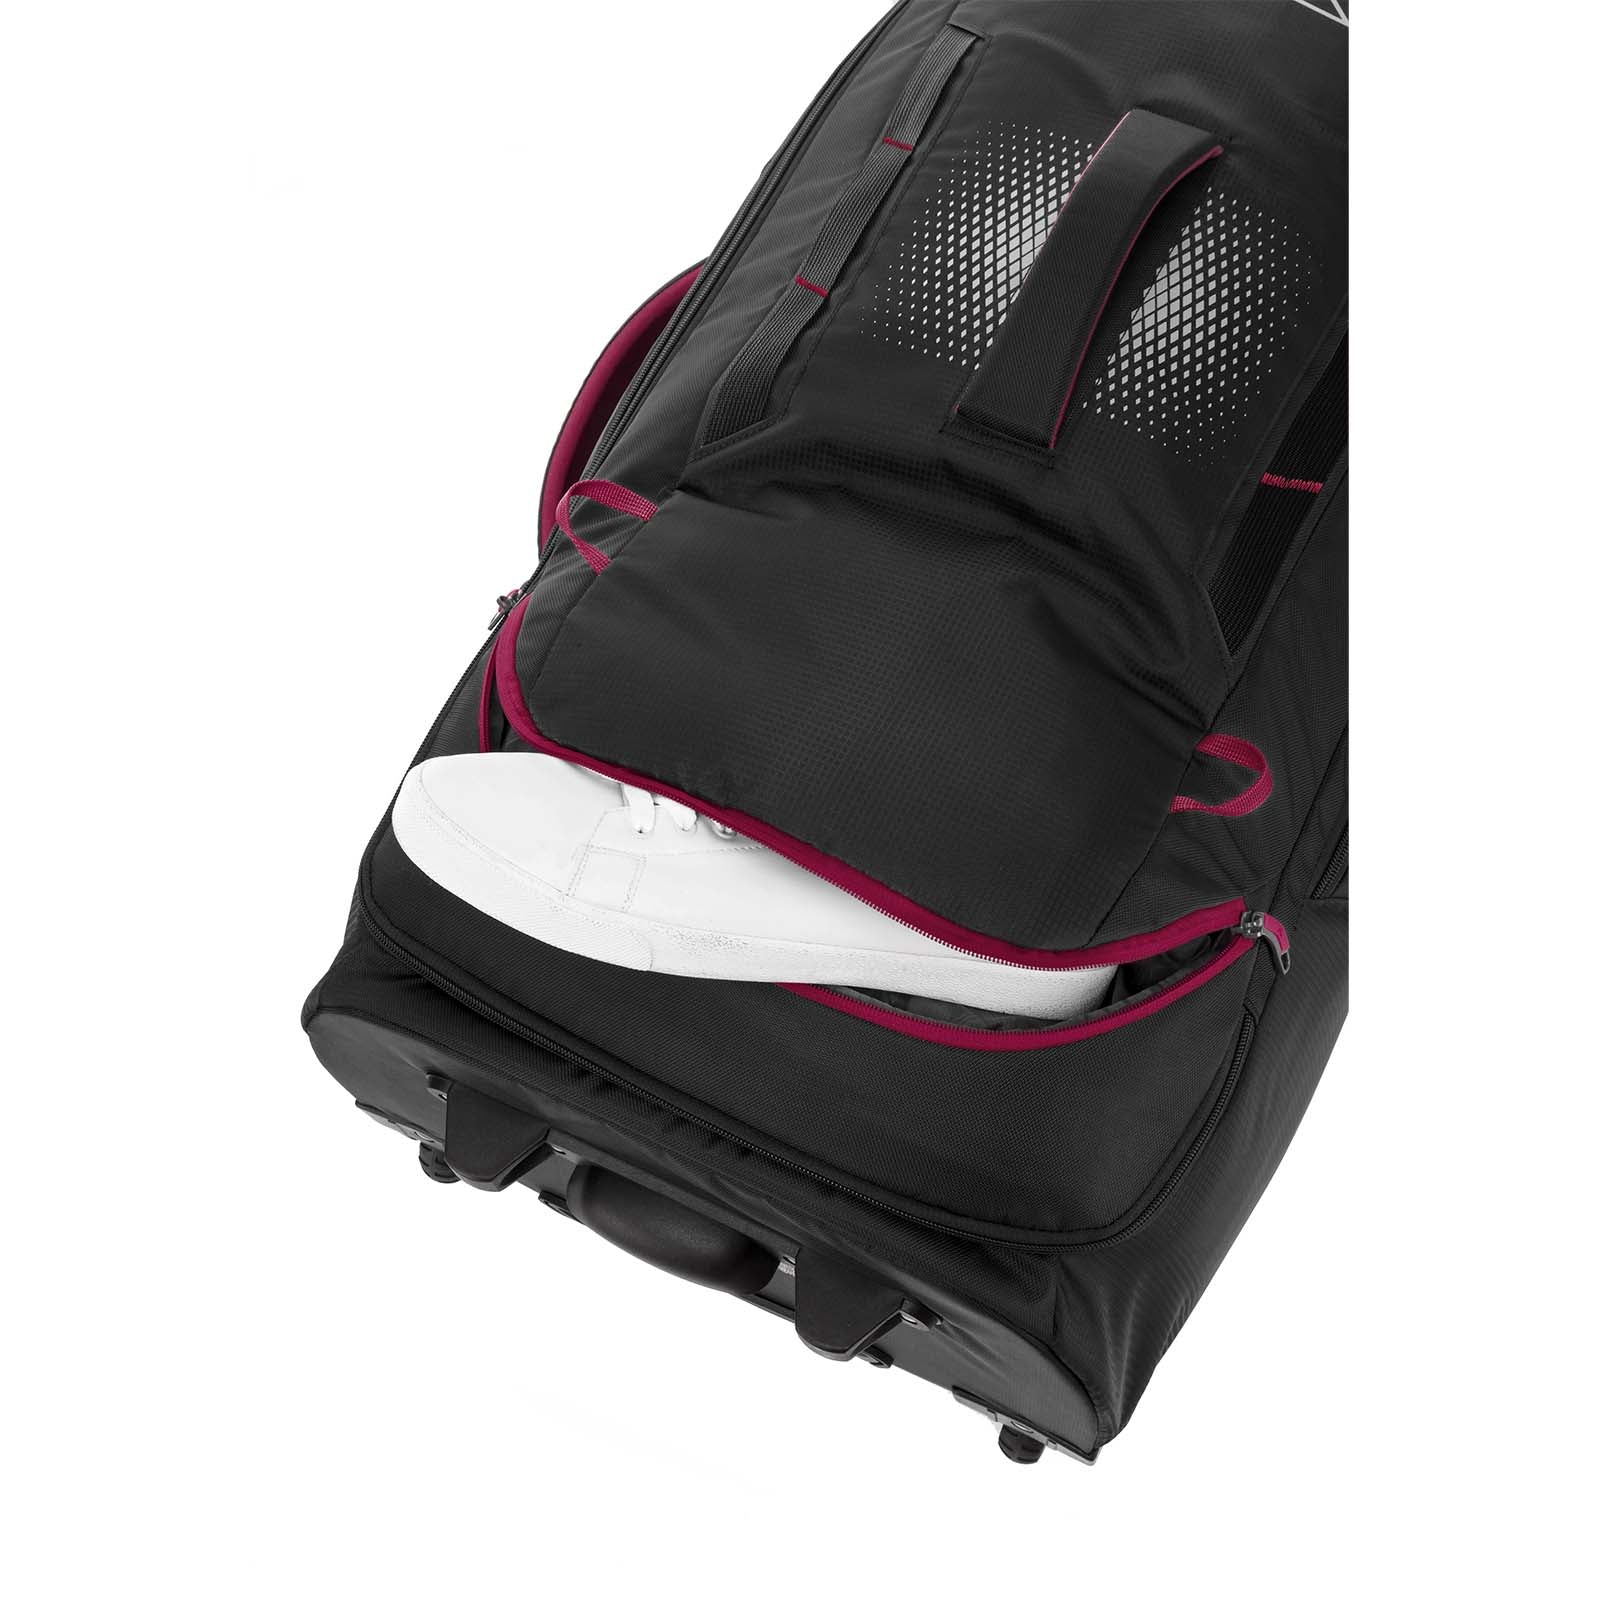    High_Sierra_Composite_V4_76cm_Carry-On_Wheeled_Duffel_Black_Red_Shoe_Bag